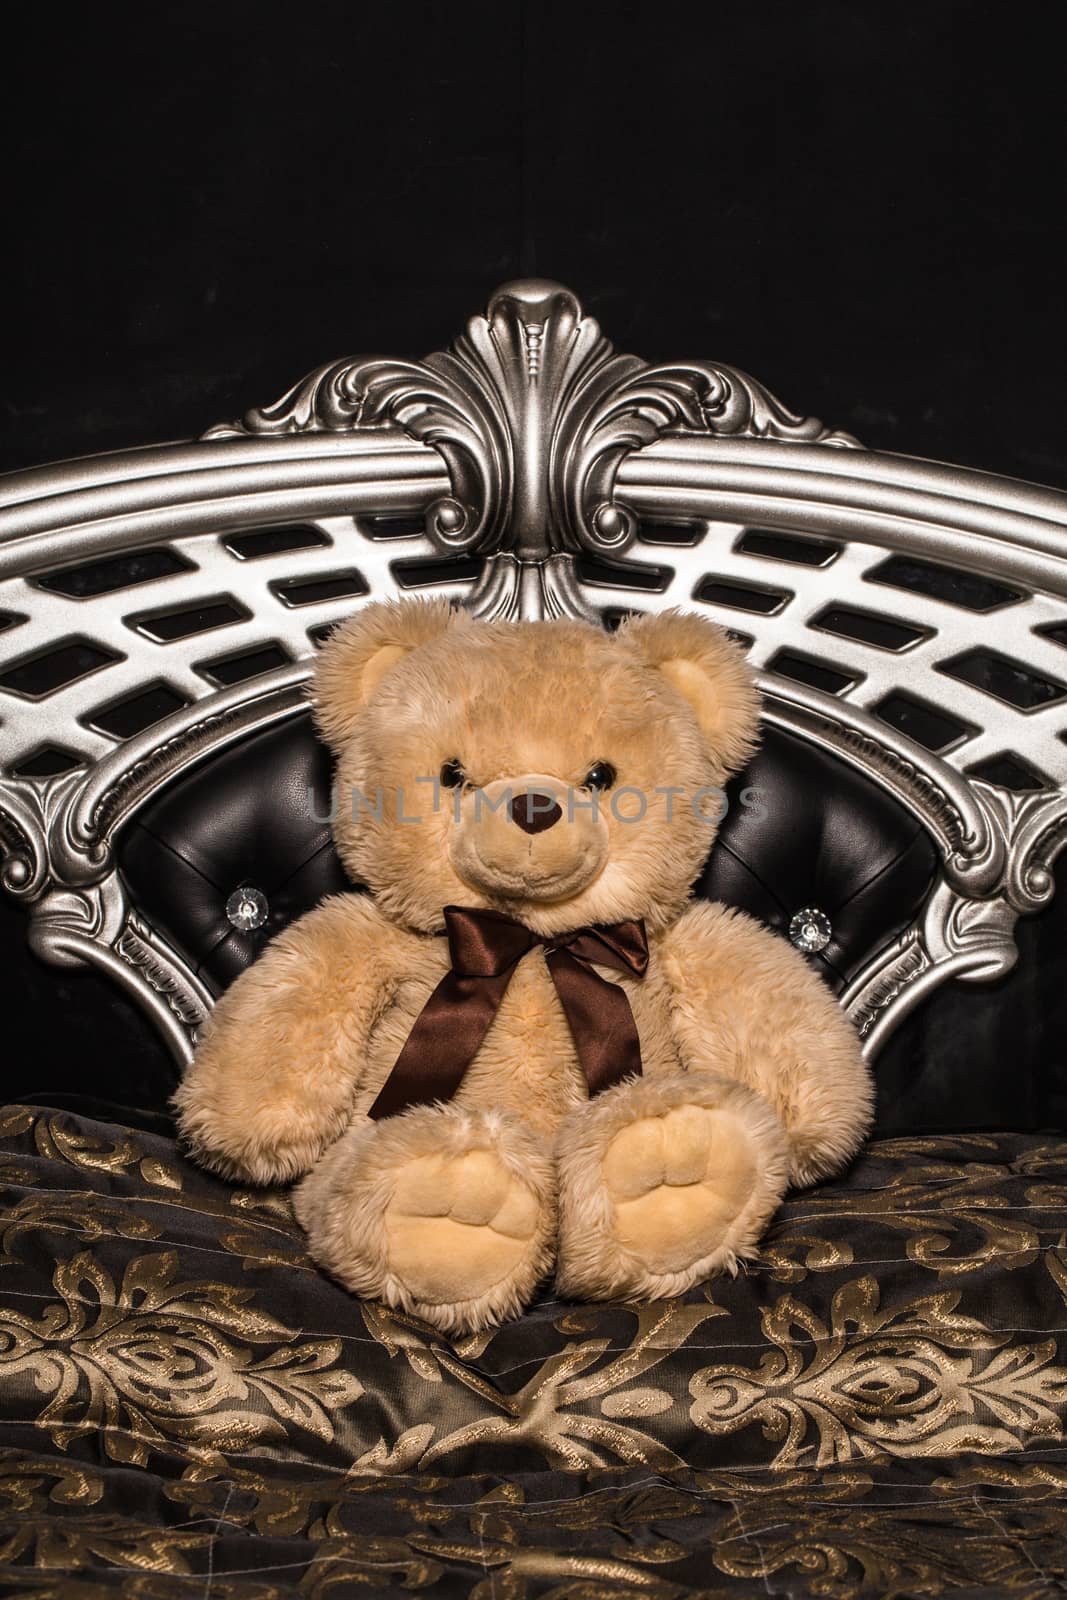 Teddy bear sits on a steel chair